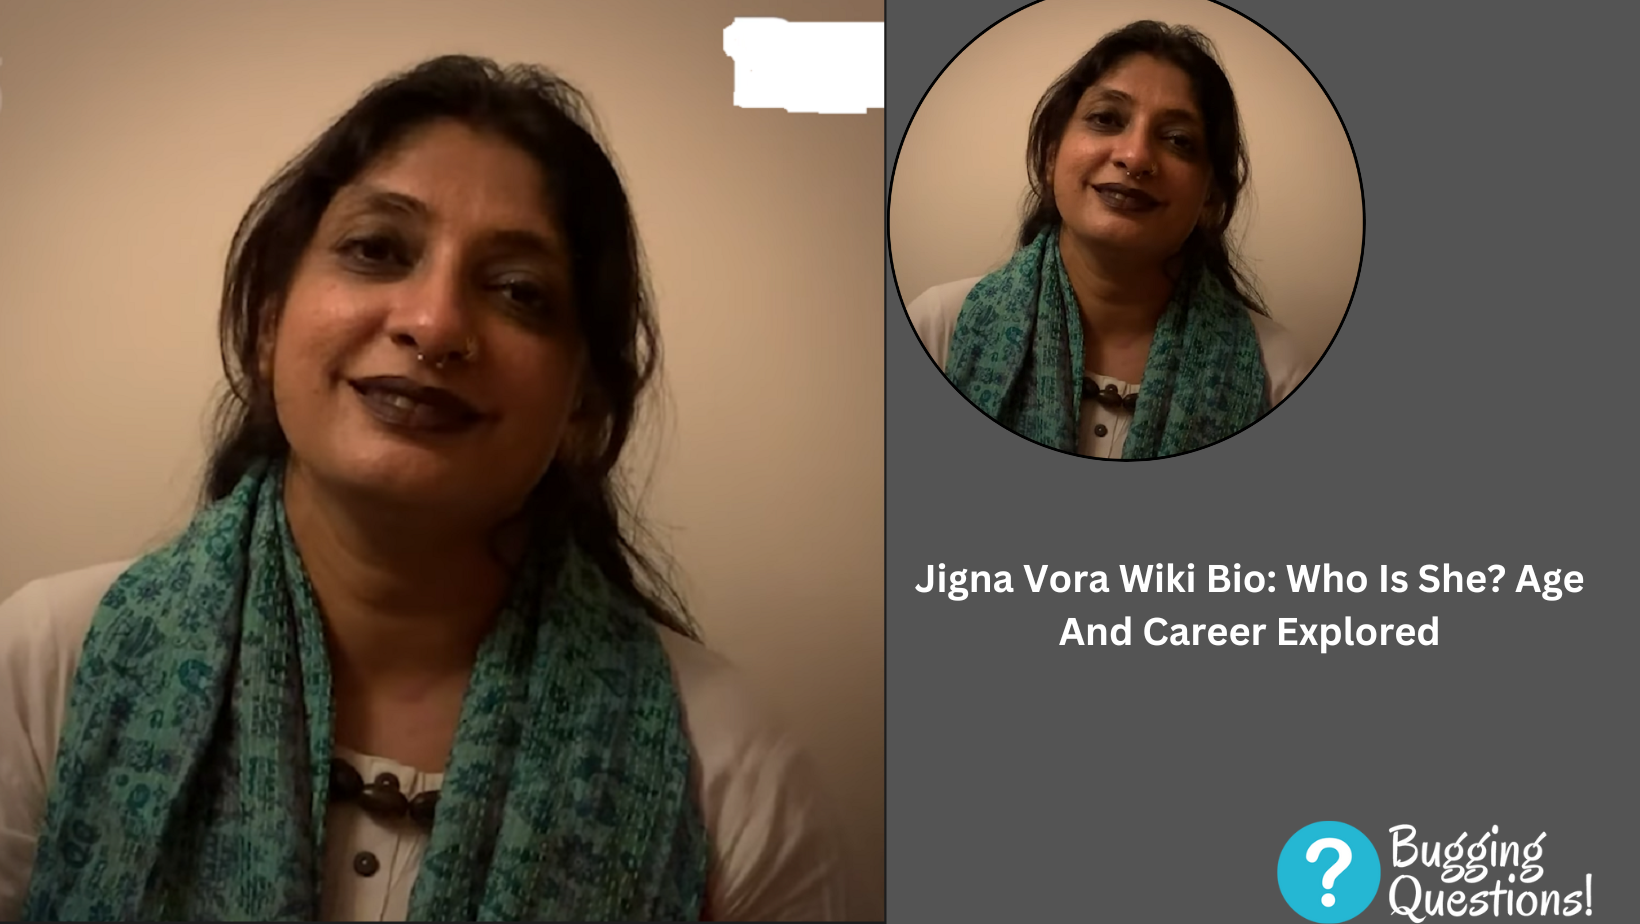 Jigna Vora Wiki Bio: Who Is She?